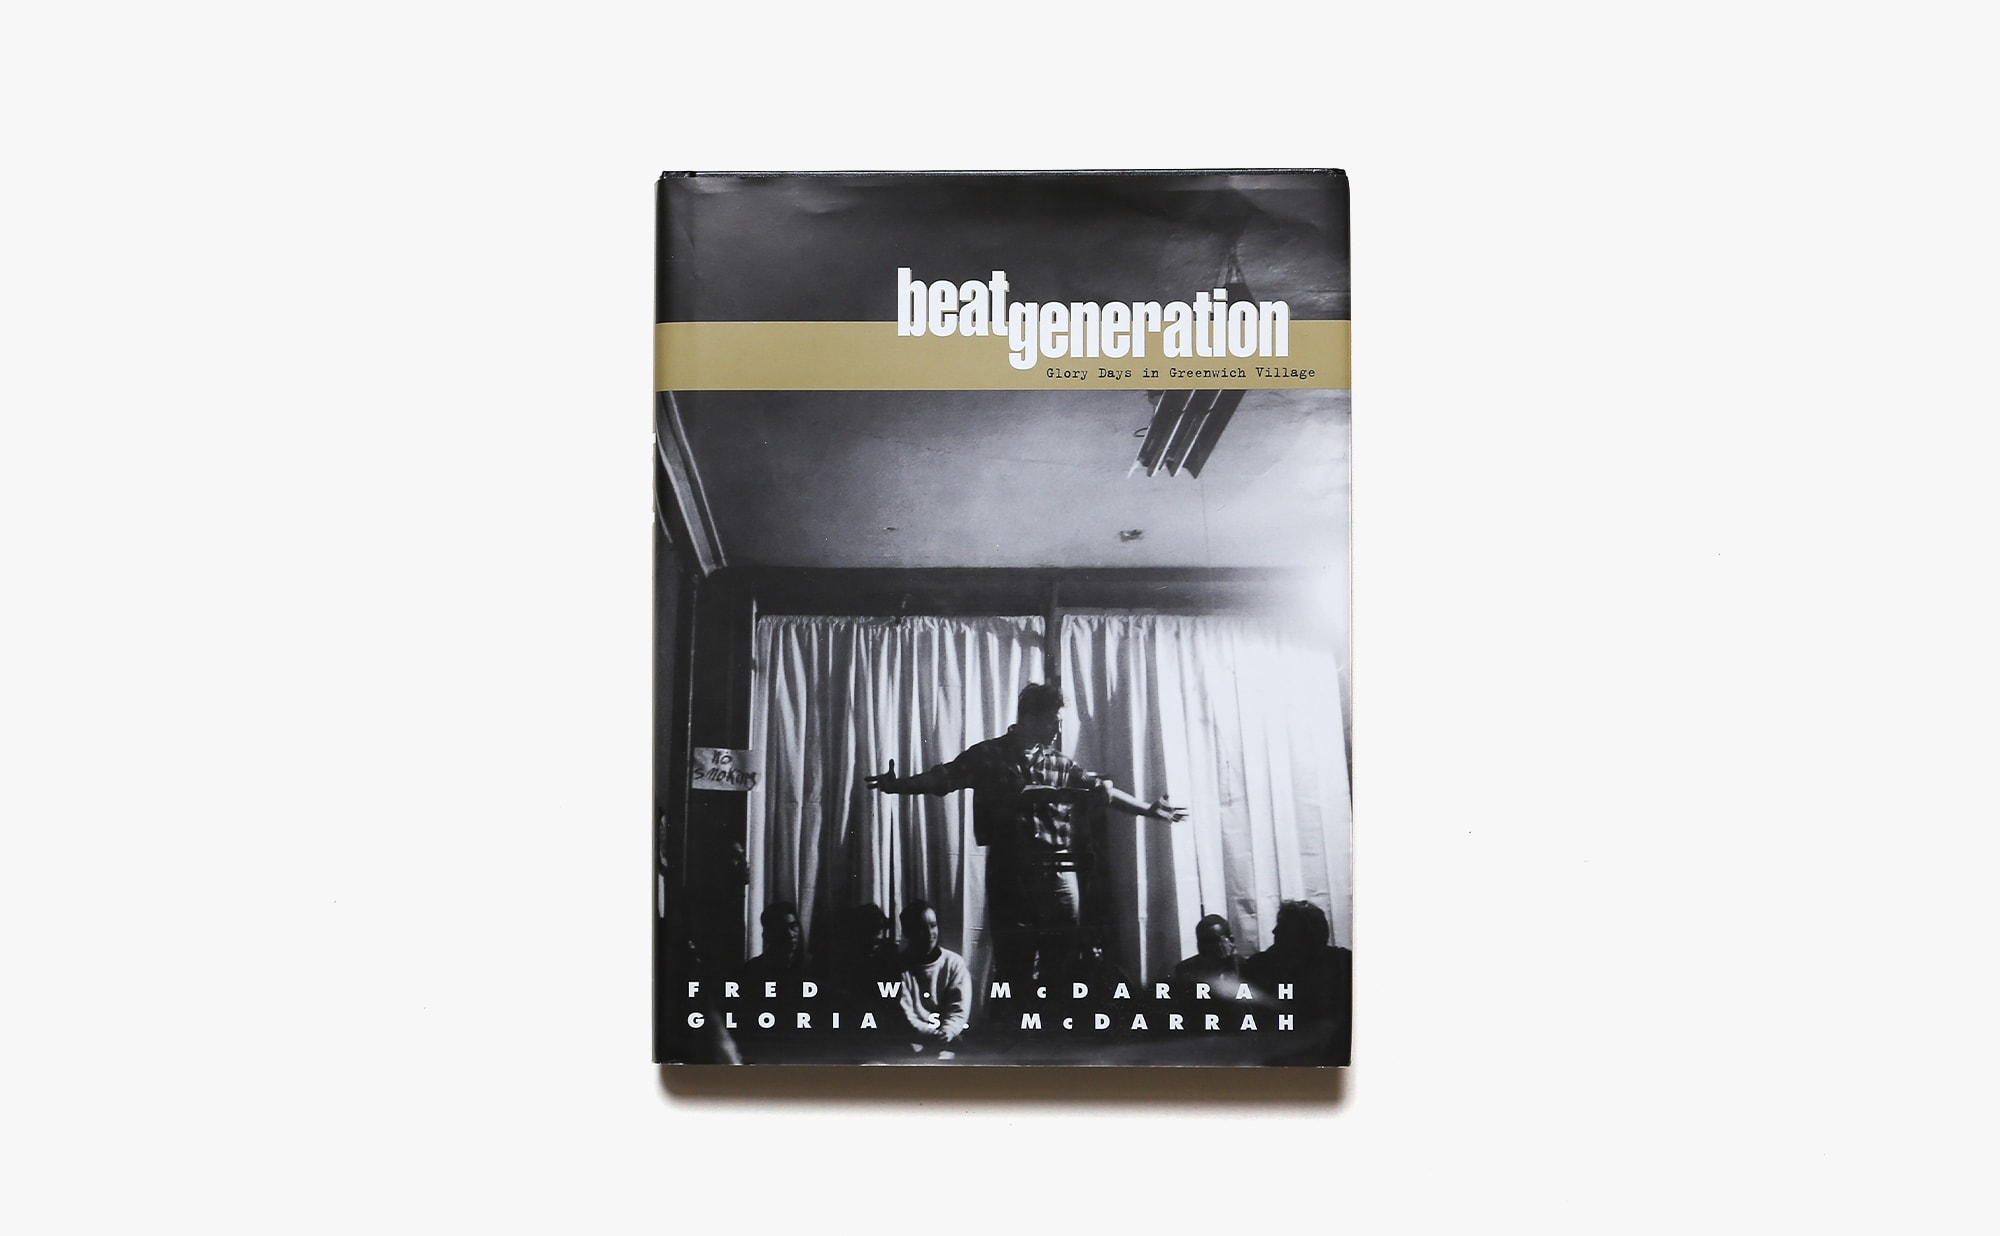 Beat Generation: Glory Days in Greenwich Village | Fred W. McDarrah、Gloria S. McDarrah